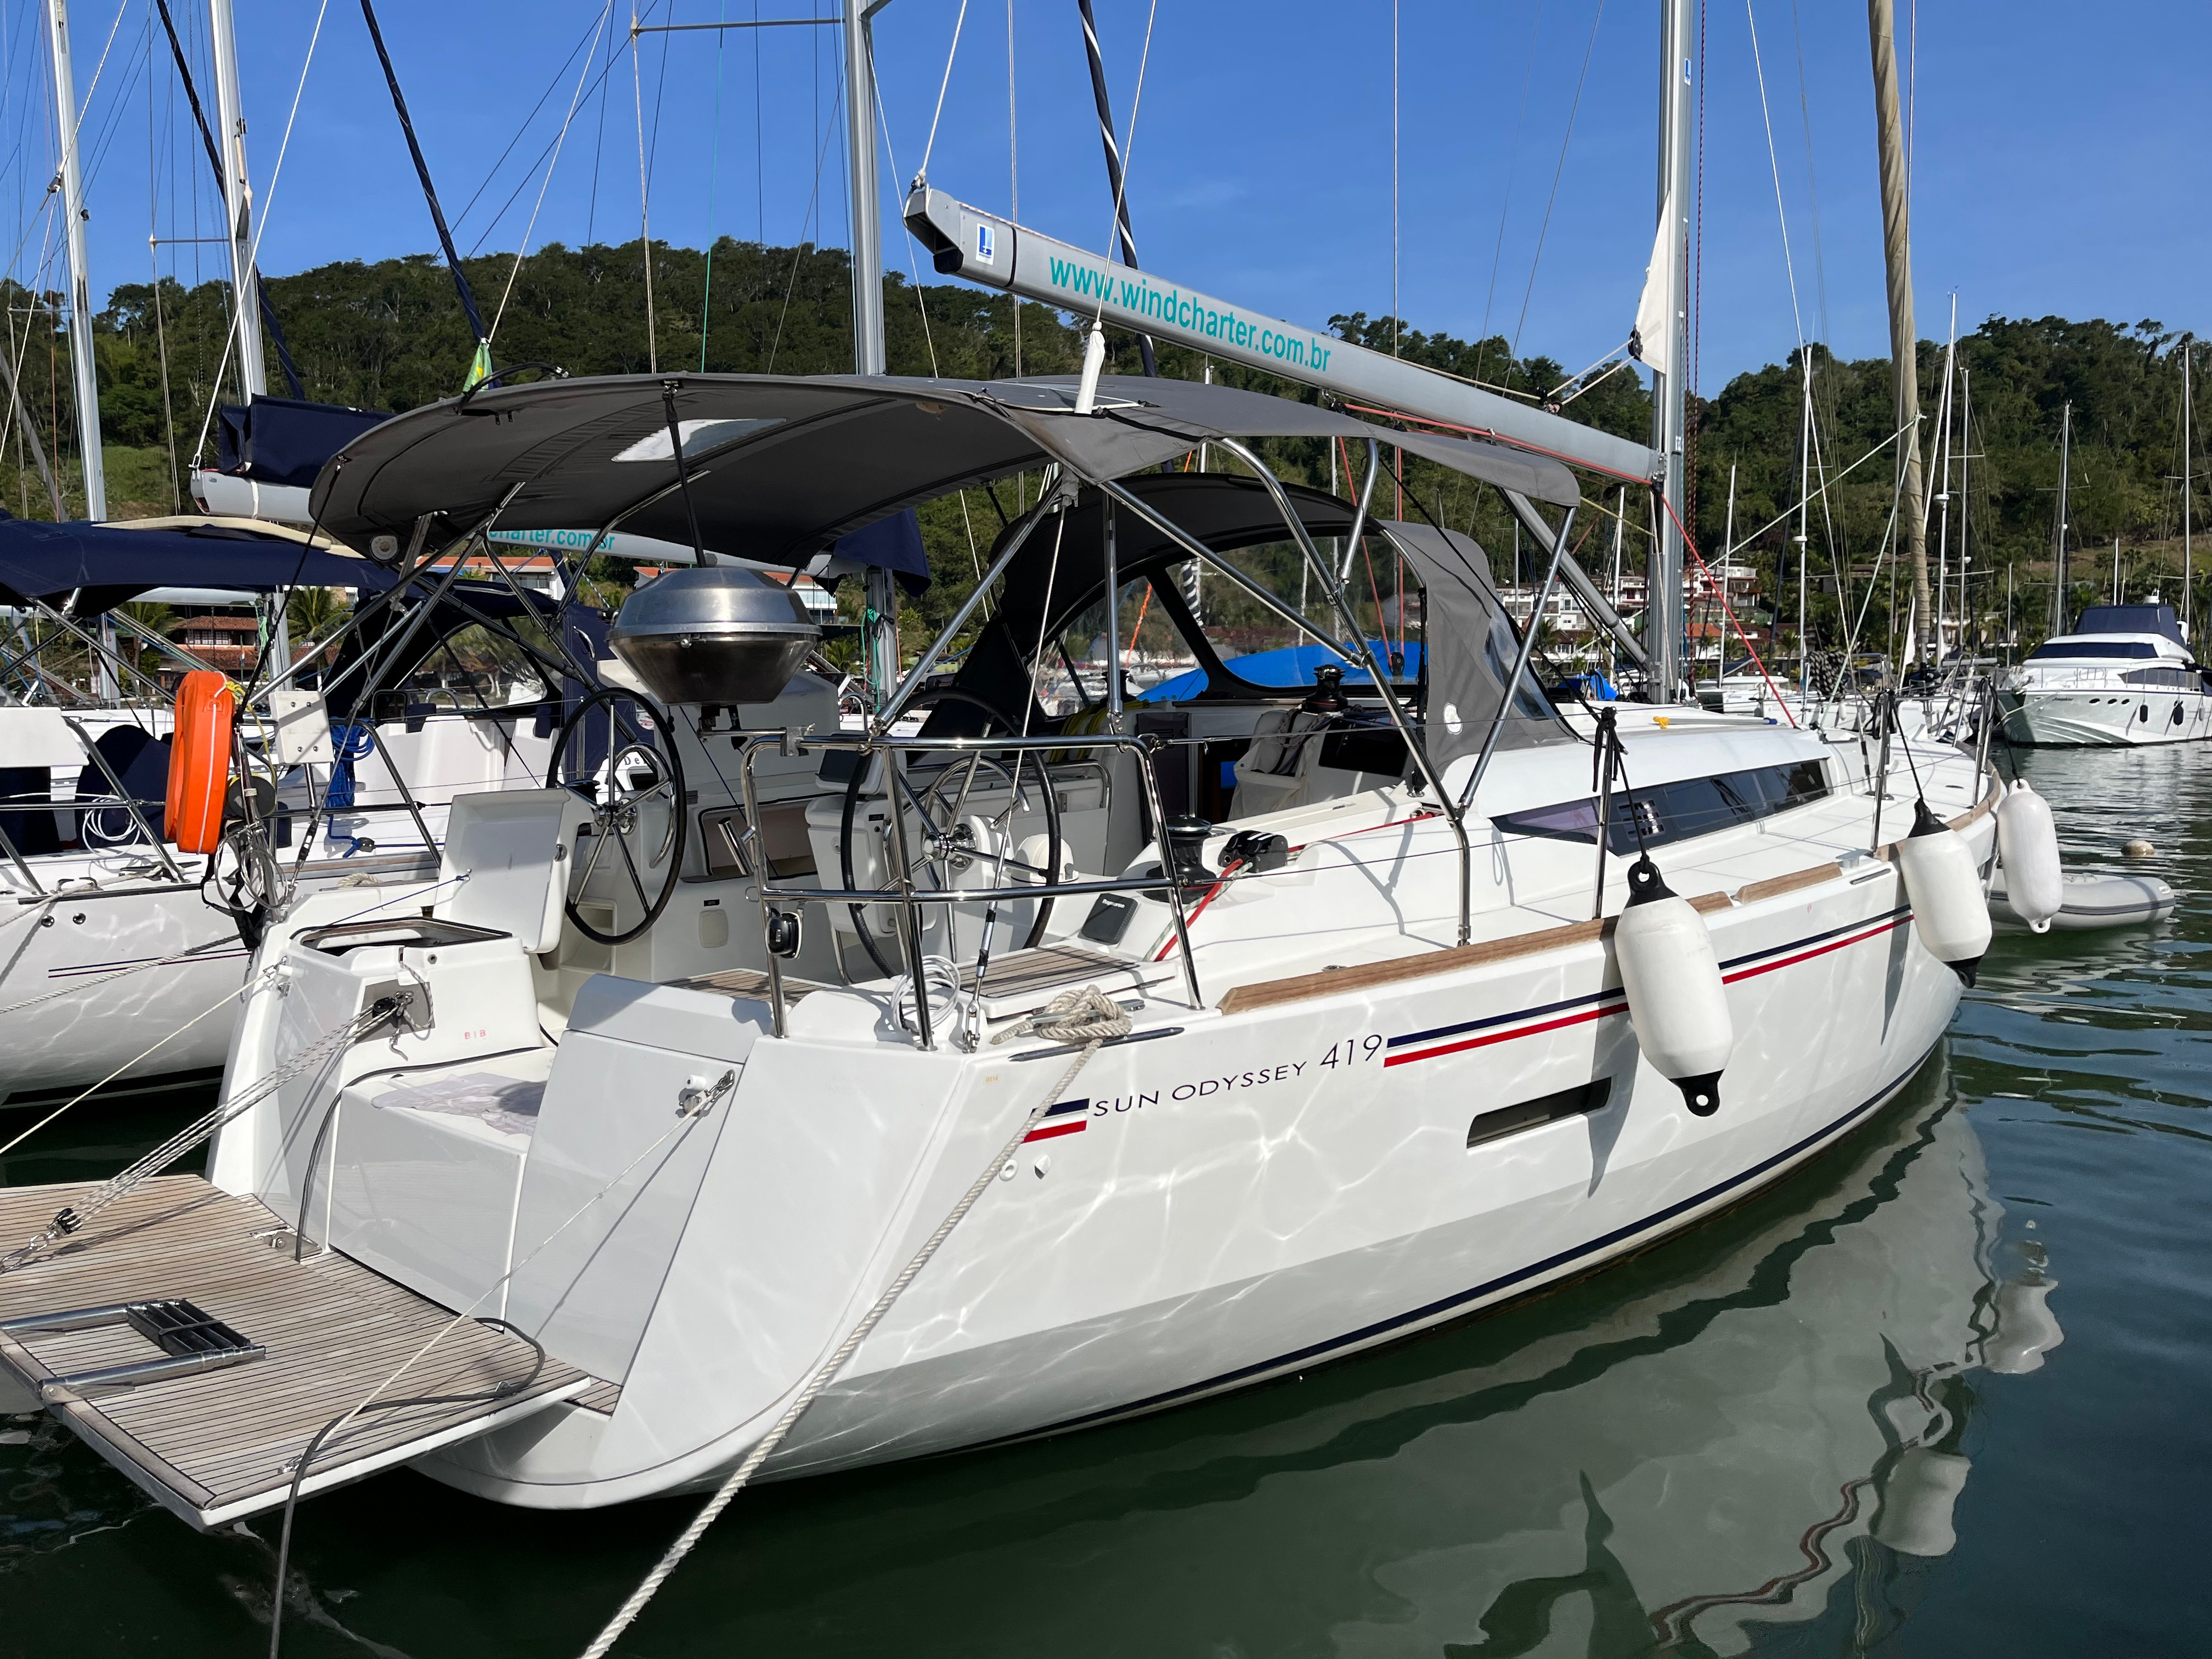 Sun Odyssey 419 - Location de yacht en Bresil & Boat hire in Brazil Rio de Janeiro Paraty Marina Porto Imperial 1